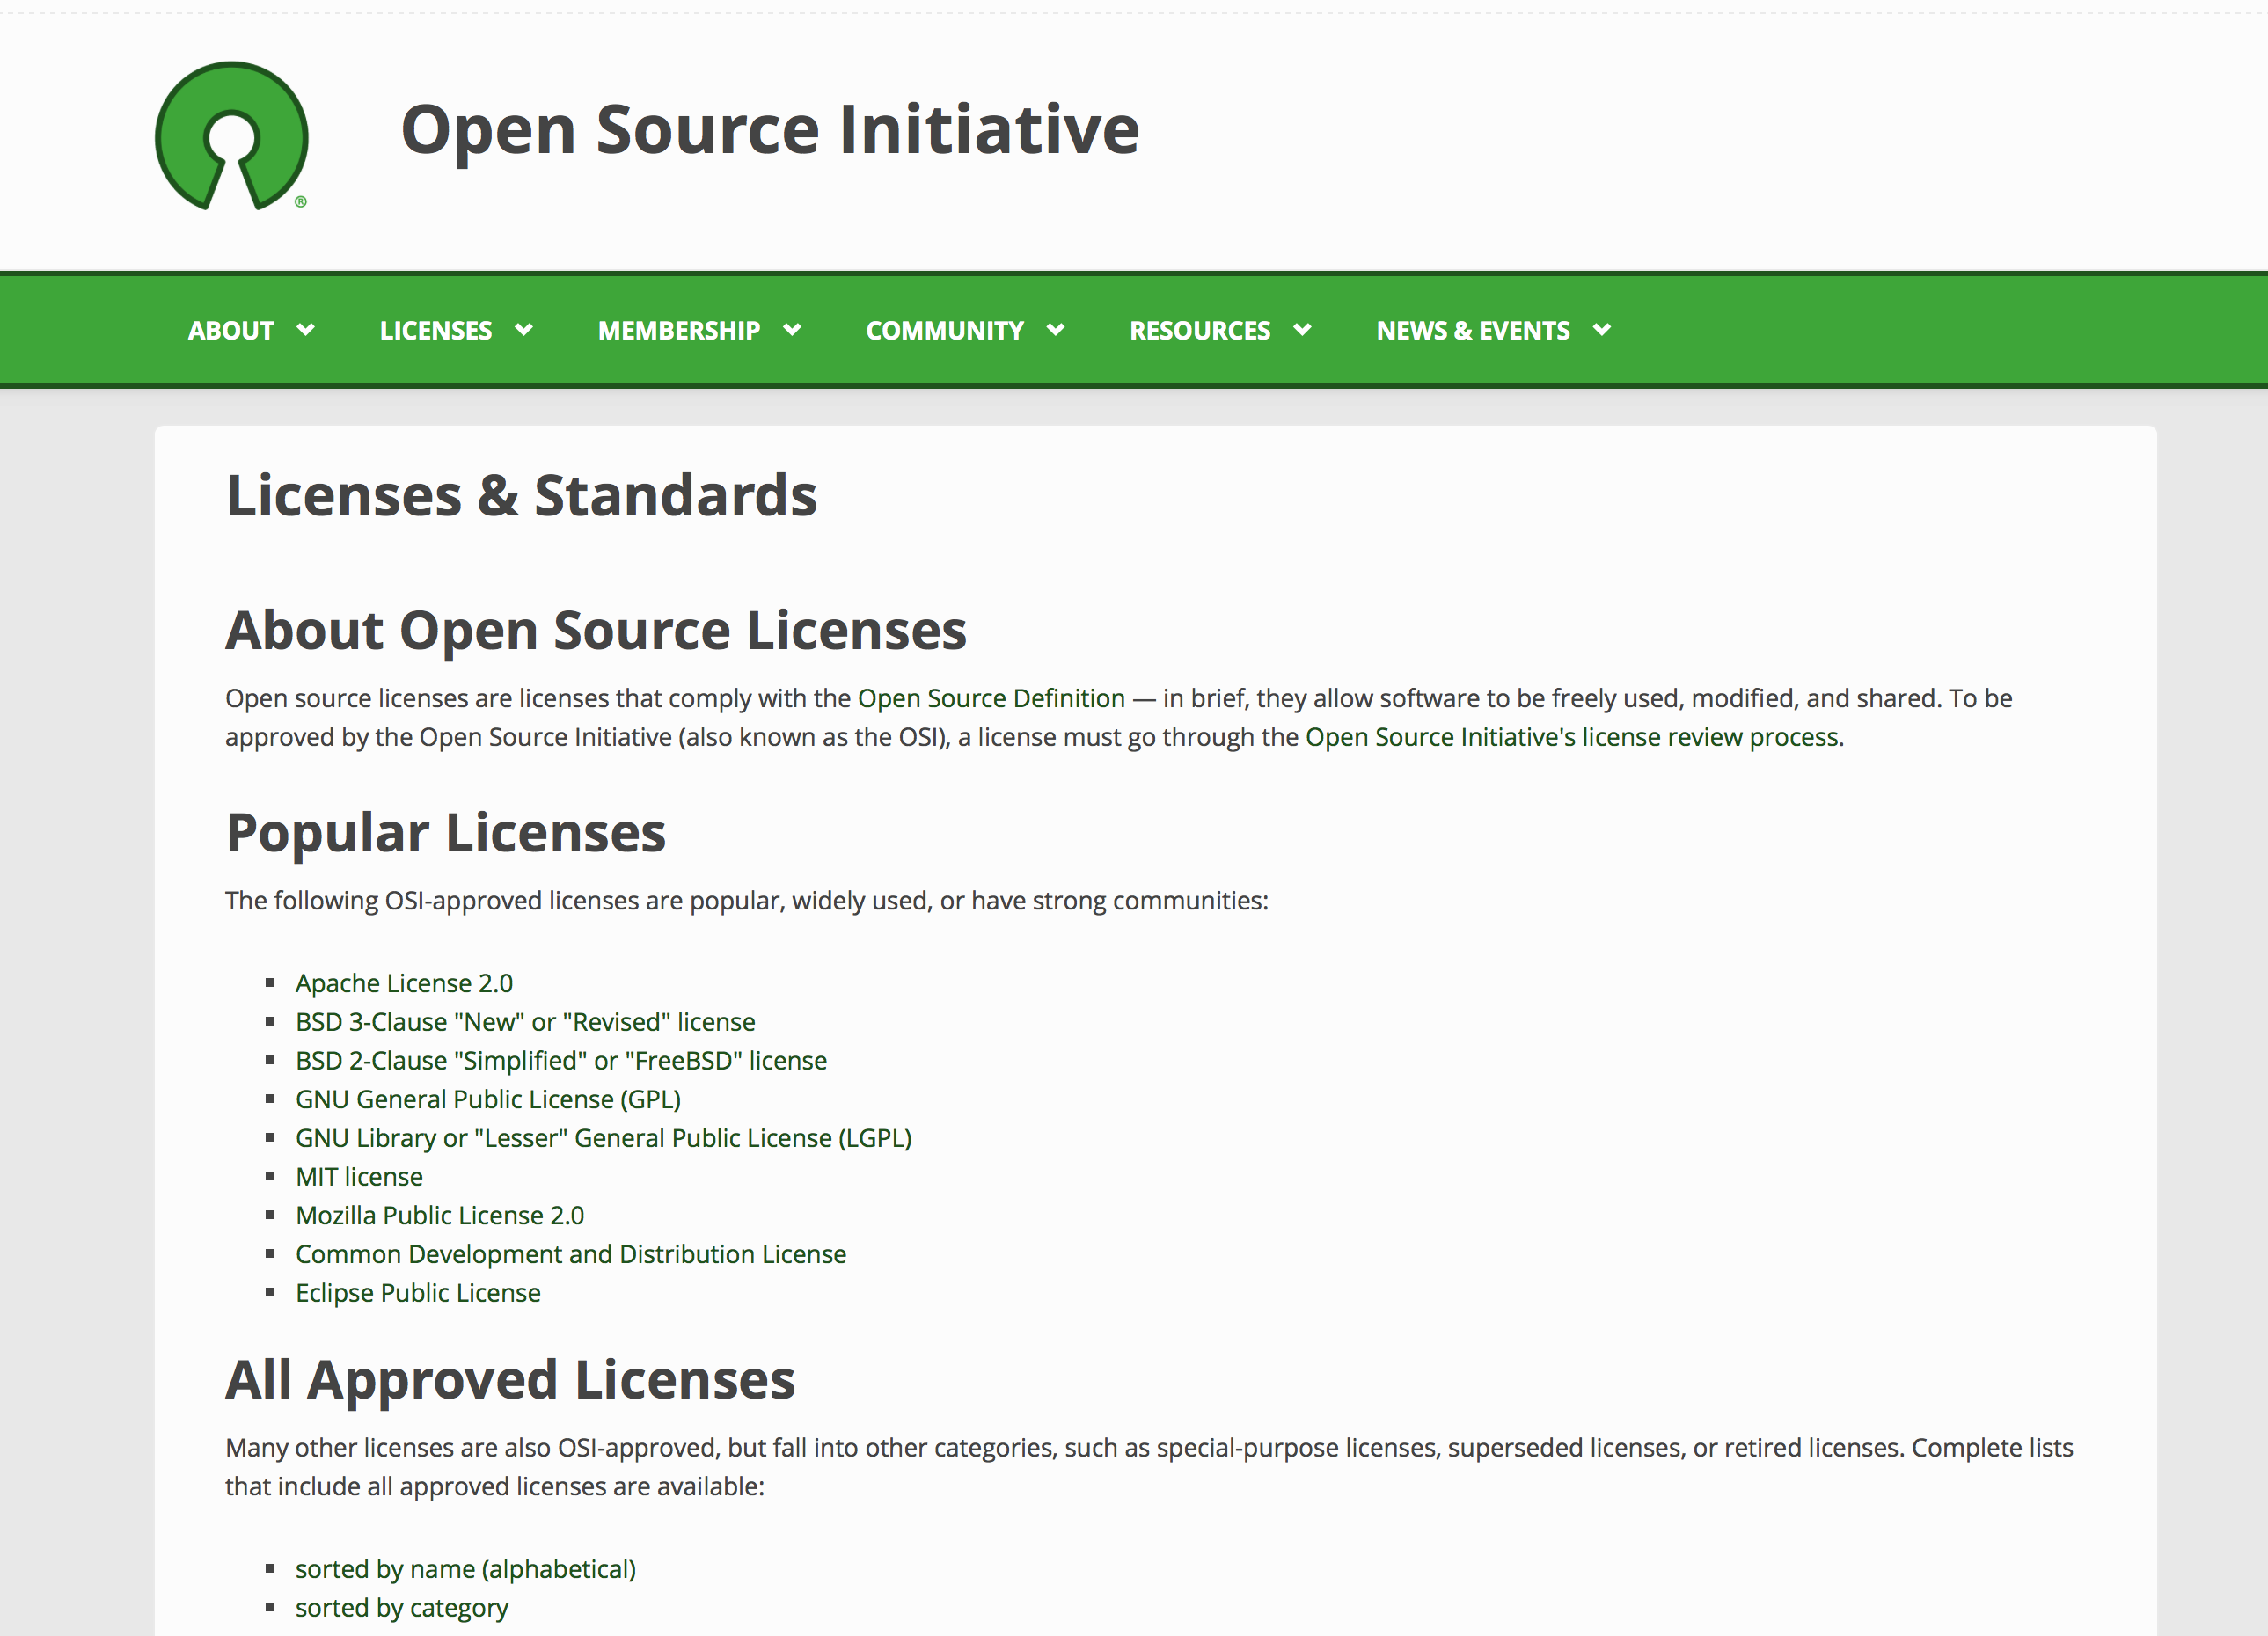 Open Source Initiative Licenses & Standards